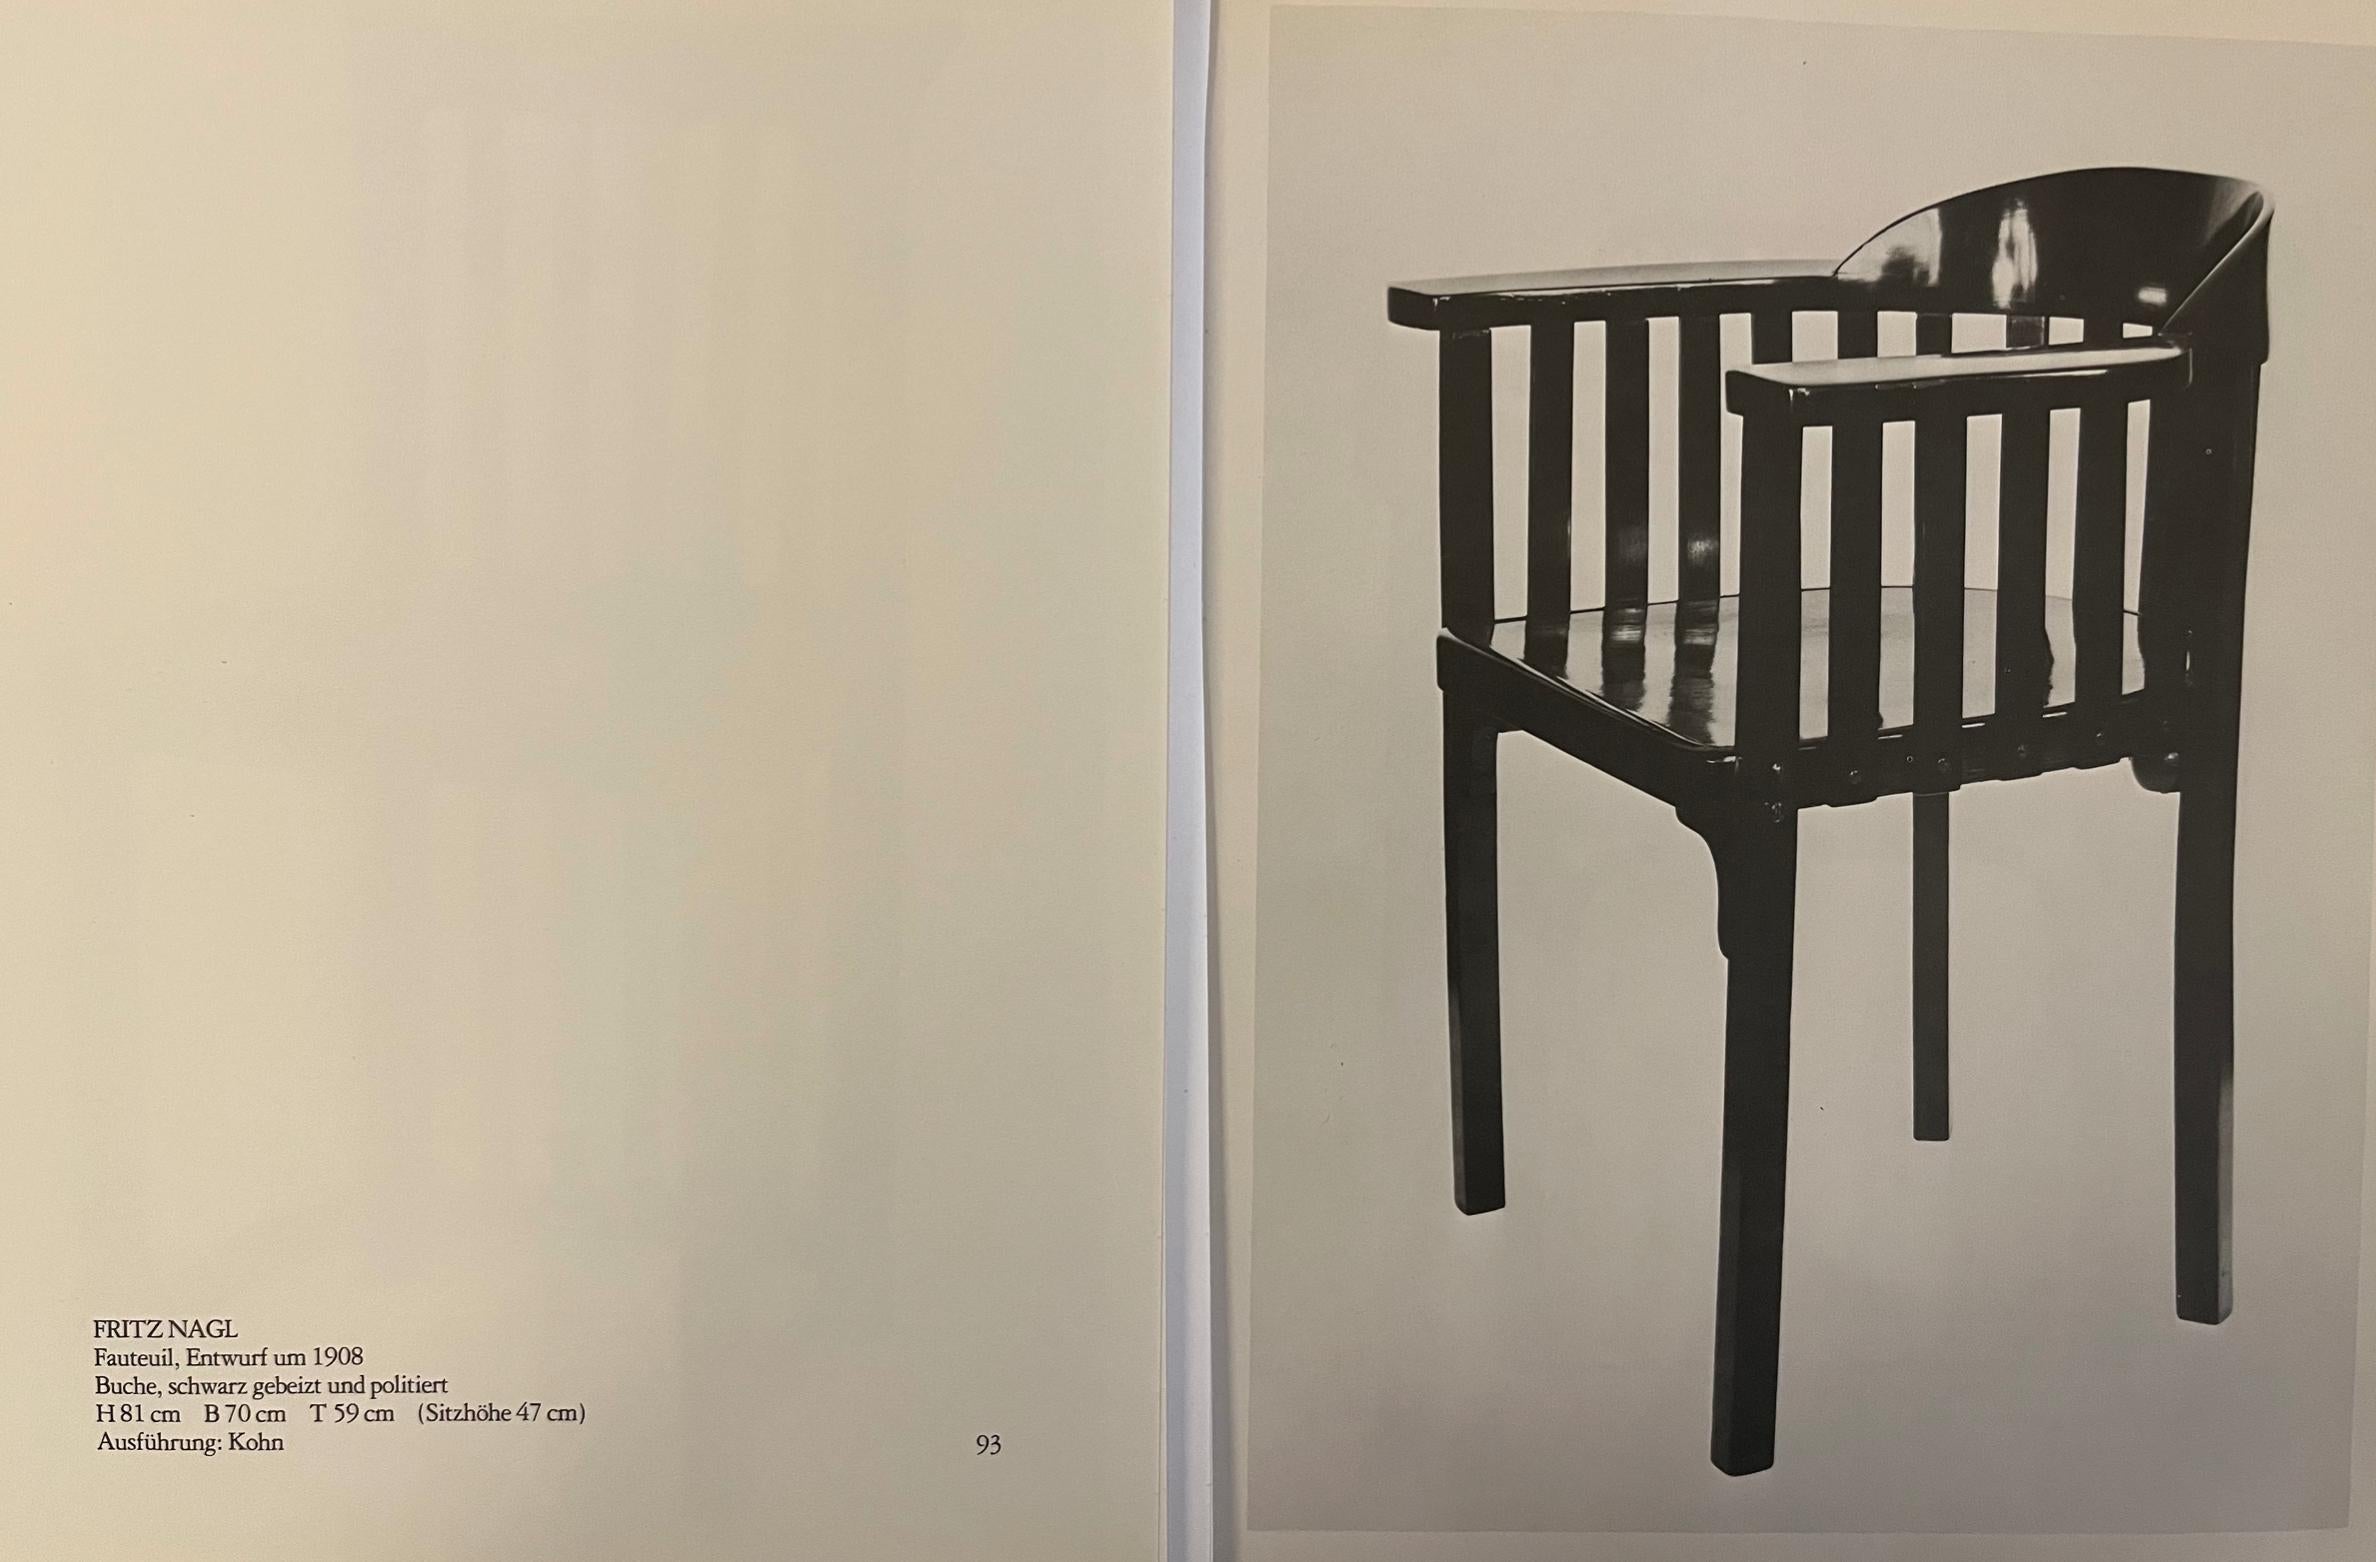 Art Nouveau Armchair, J. Hoffmann for J.J.Kohn (